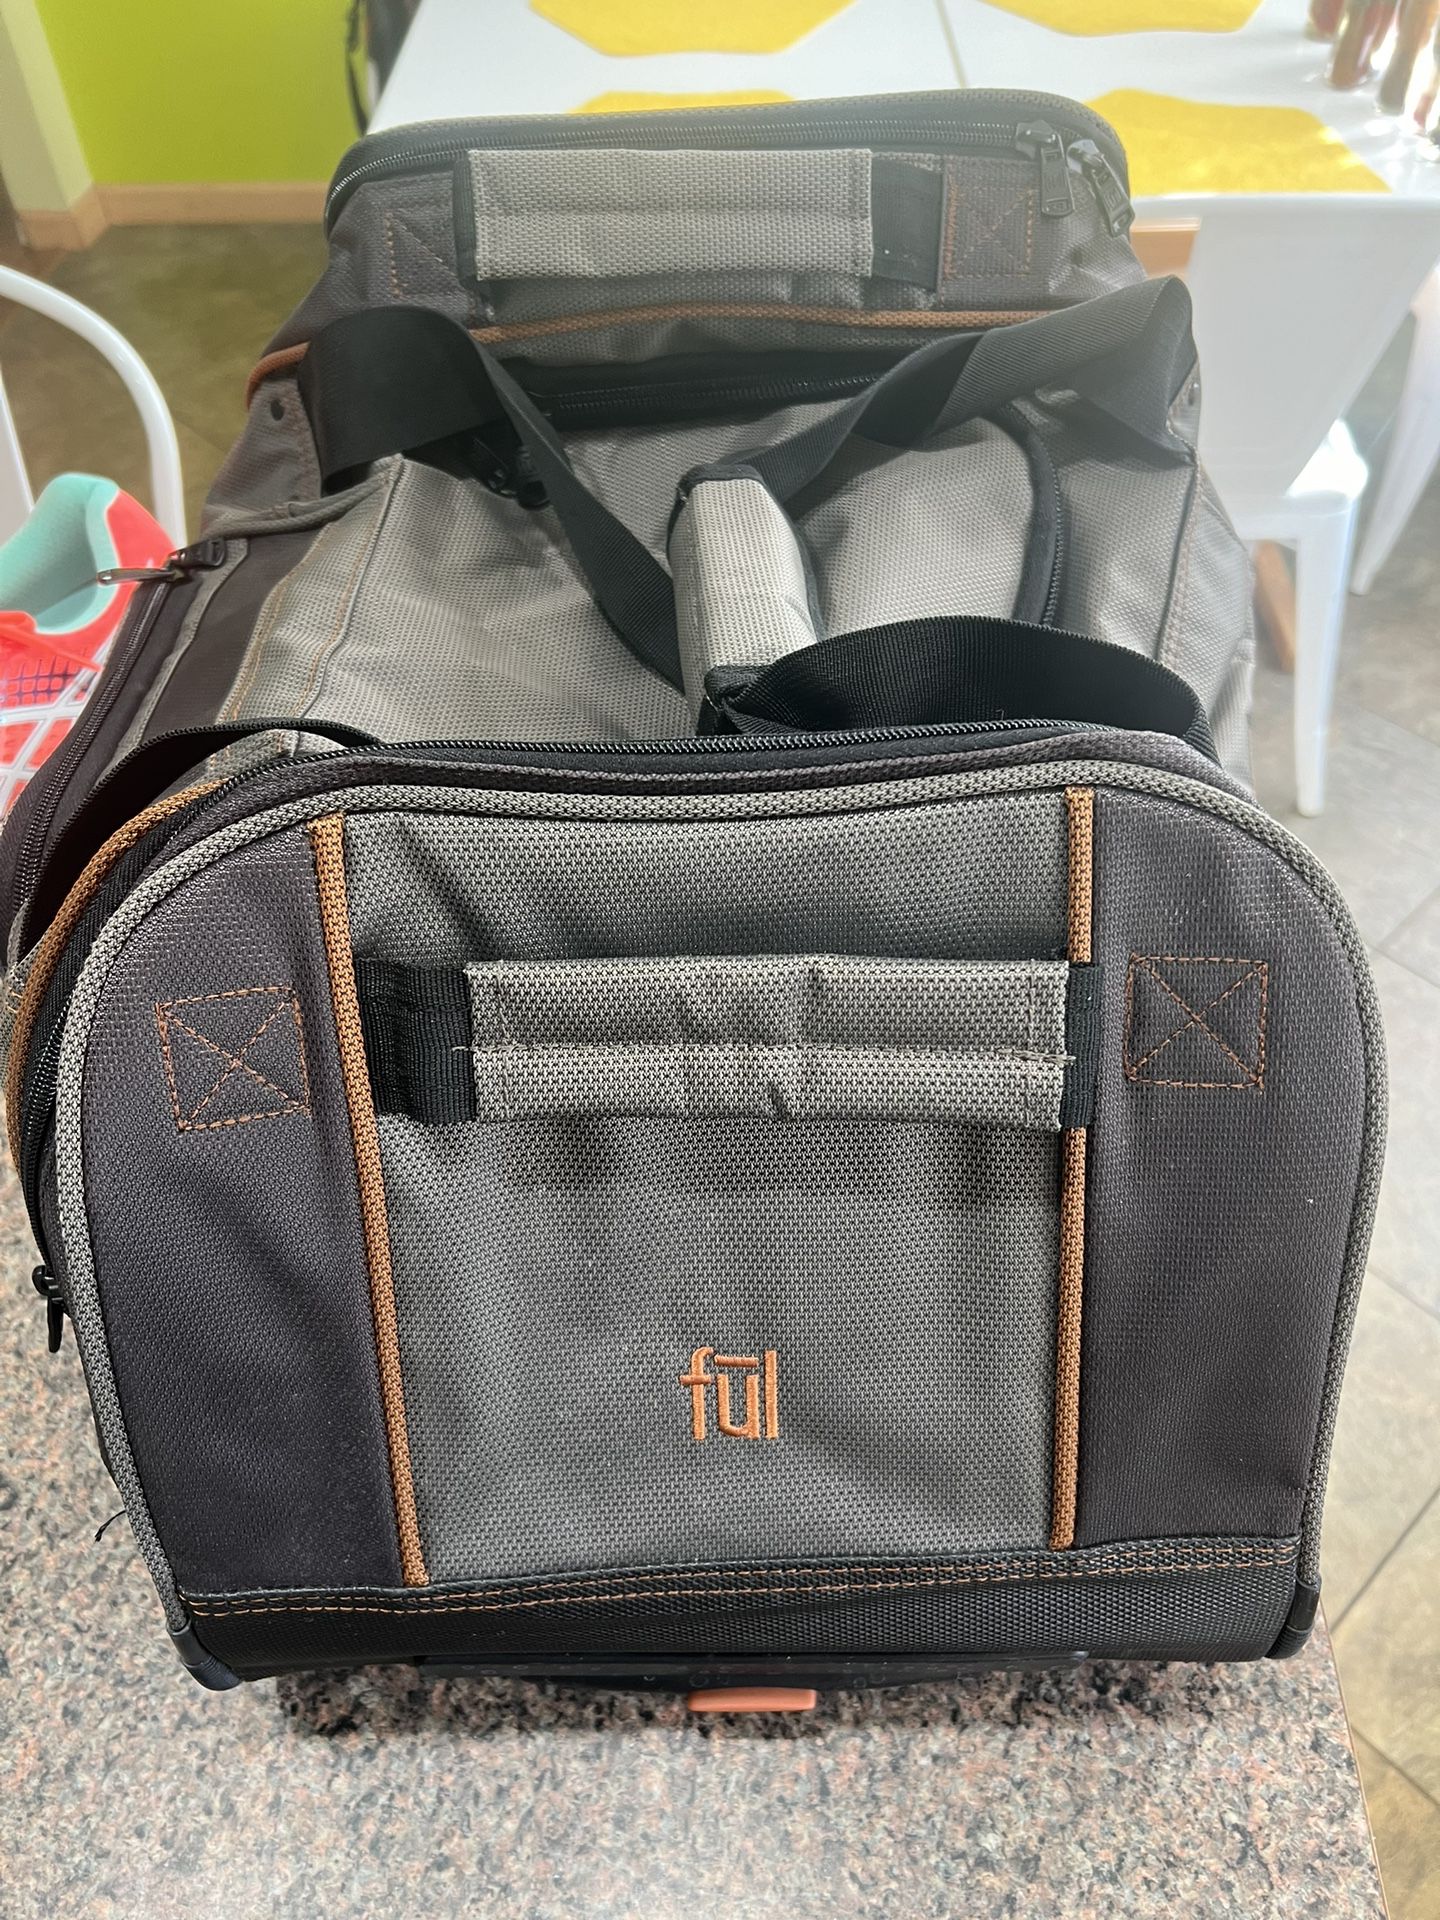 Famous designer, travel bag, with handle, NEW, invincible Ballistic nylon, $59 